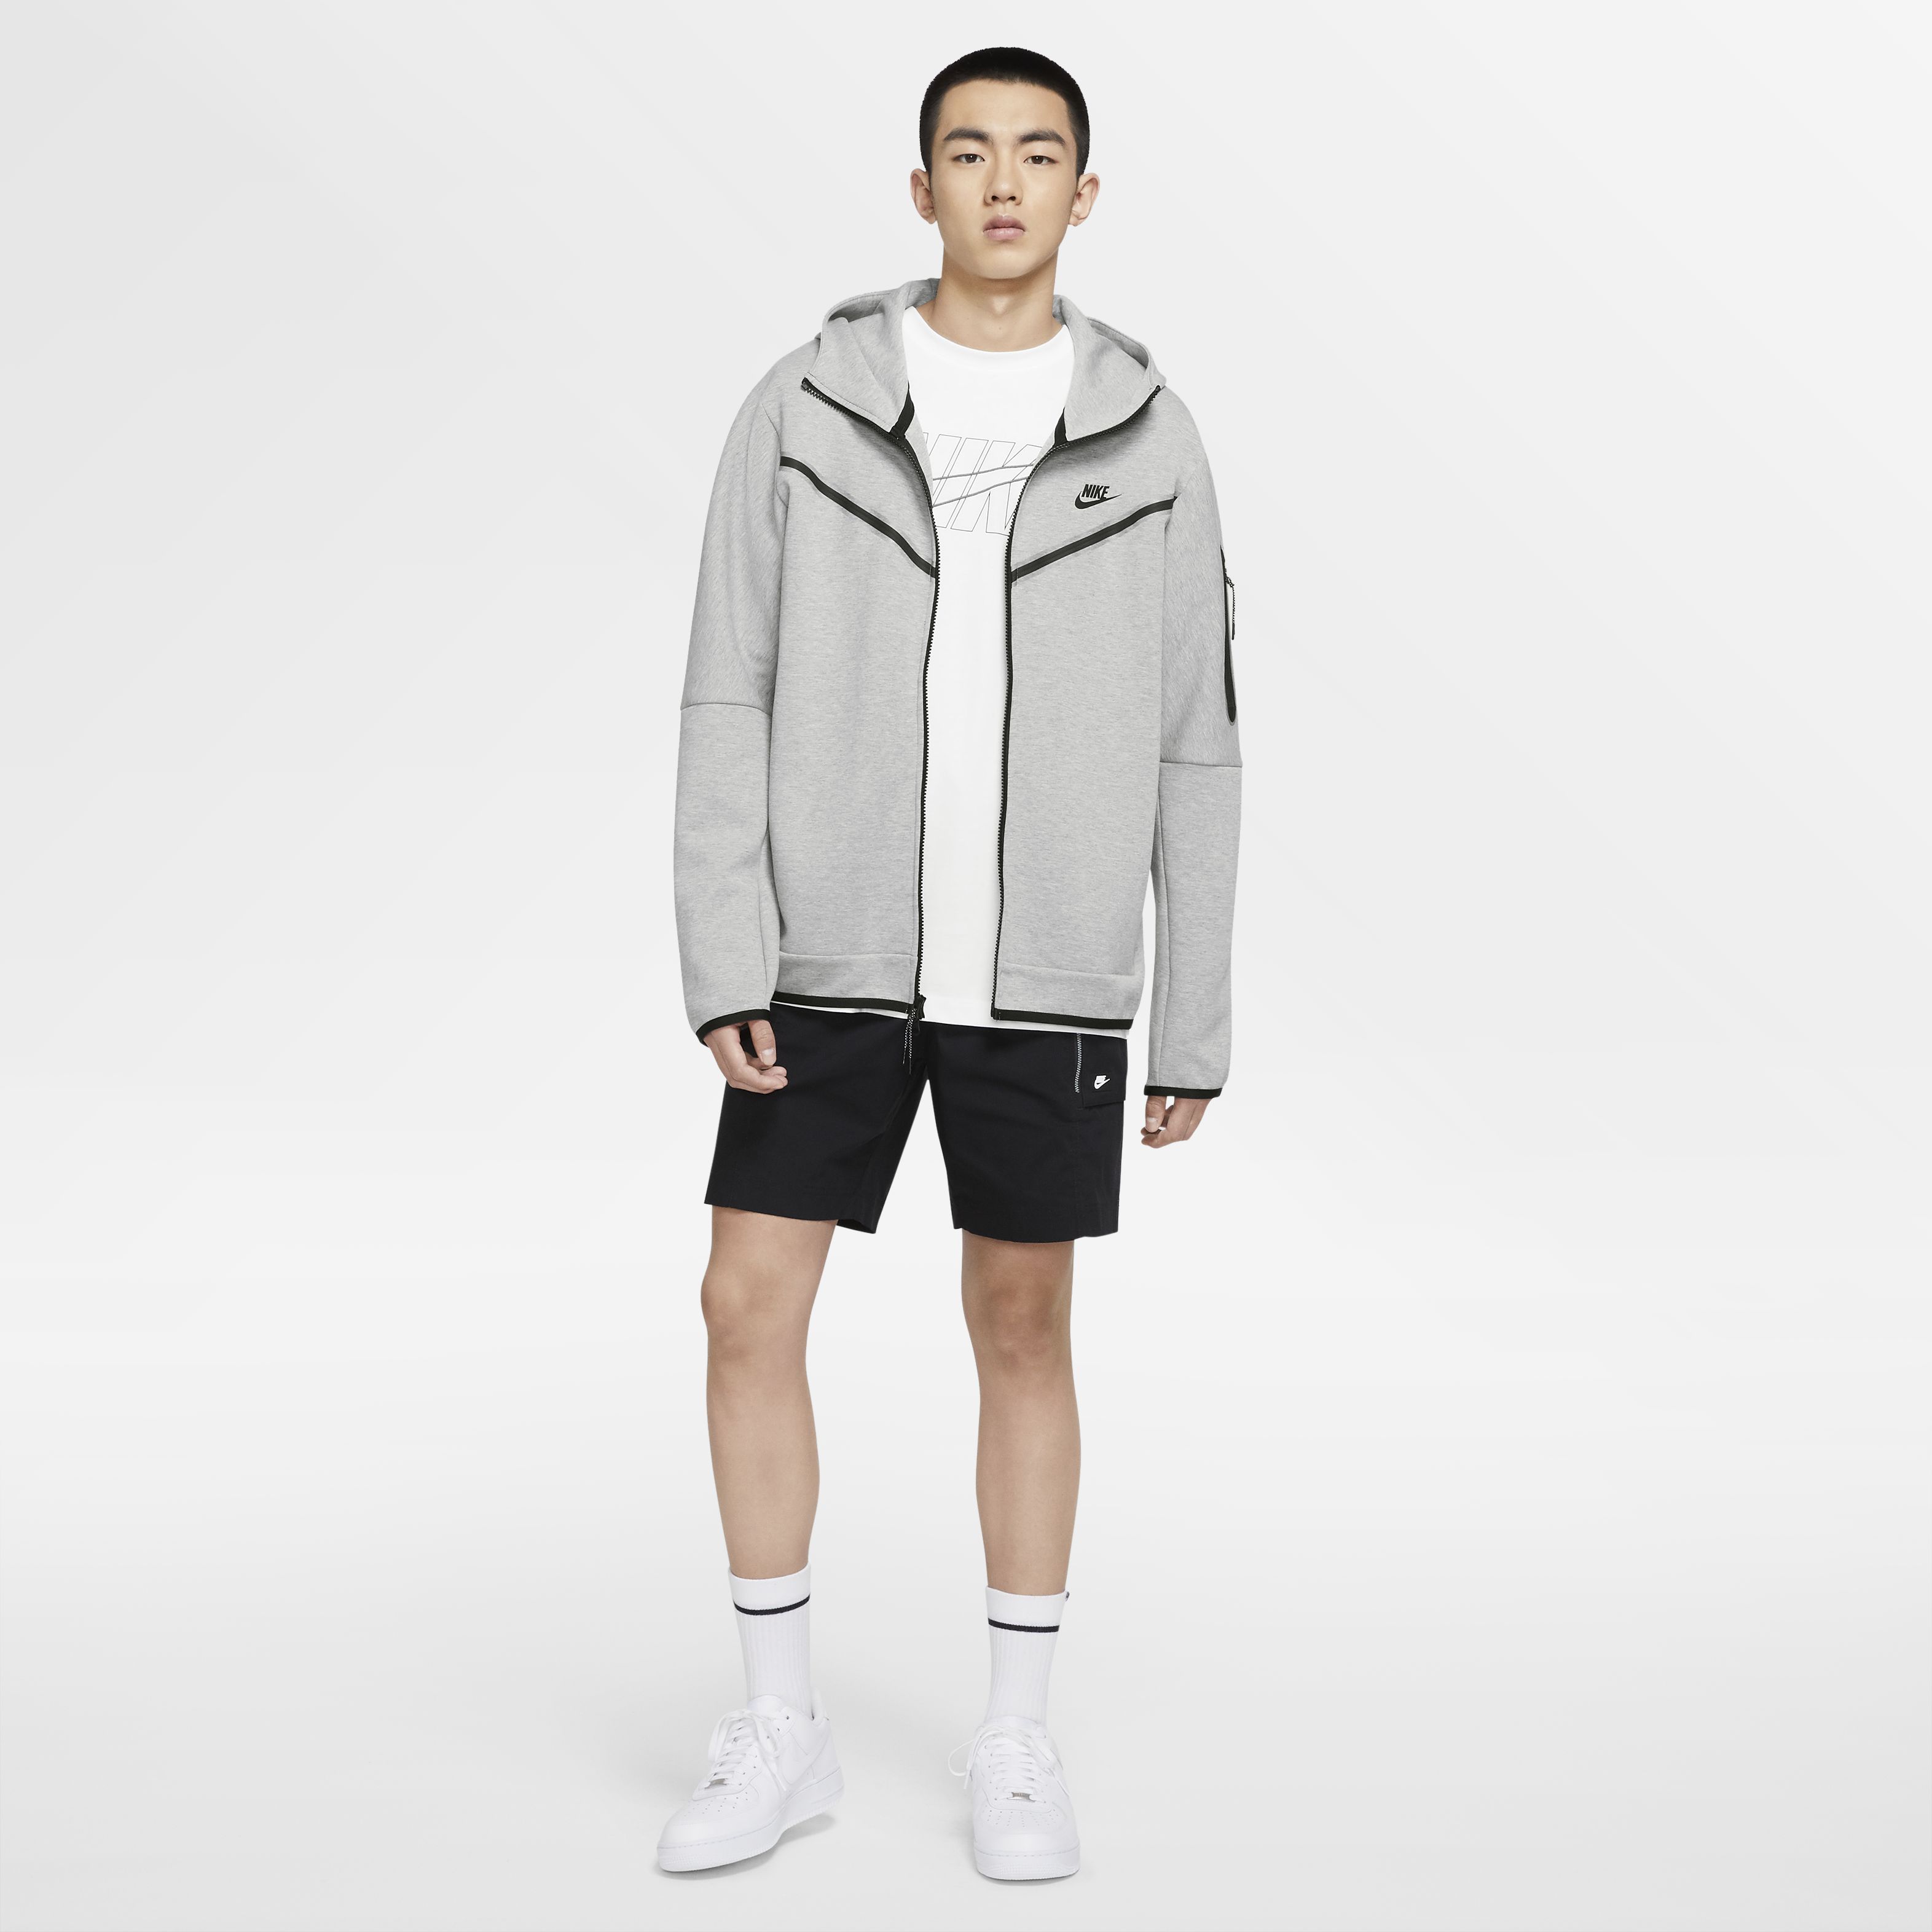 Nike Sportswear Tech Fleece, Gris oscuro jaspeado/Negro, hi-res